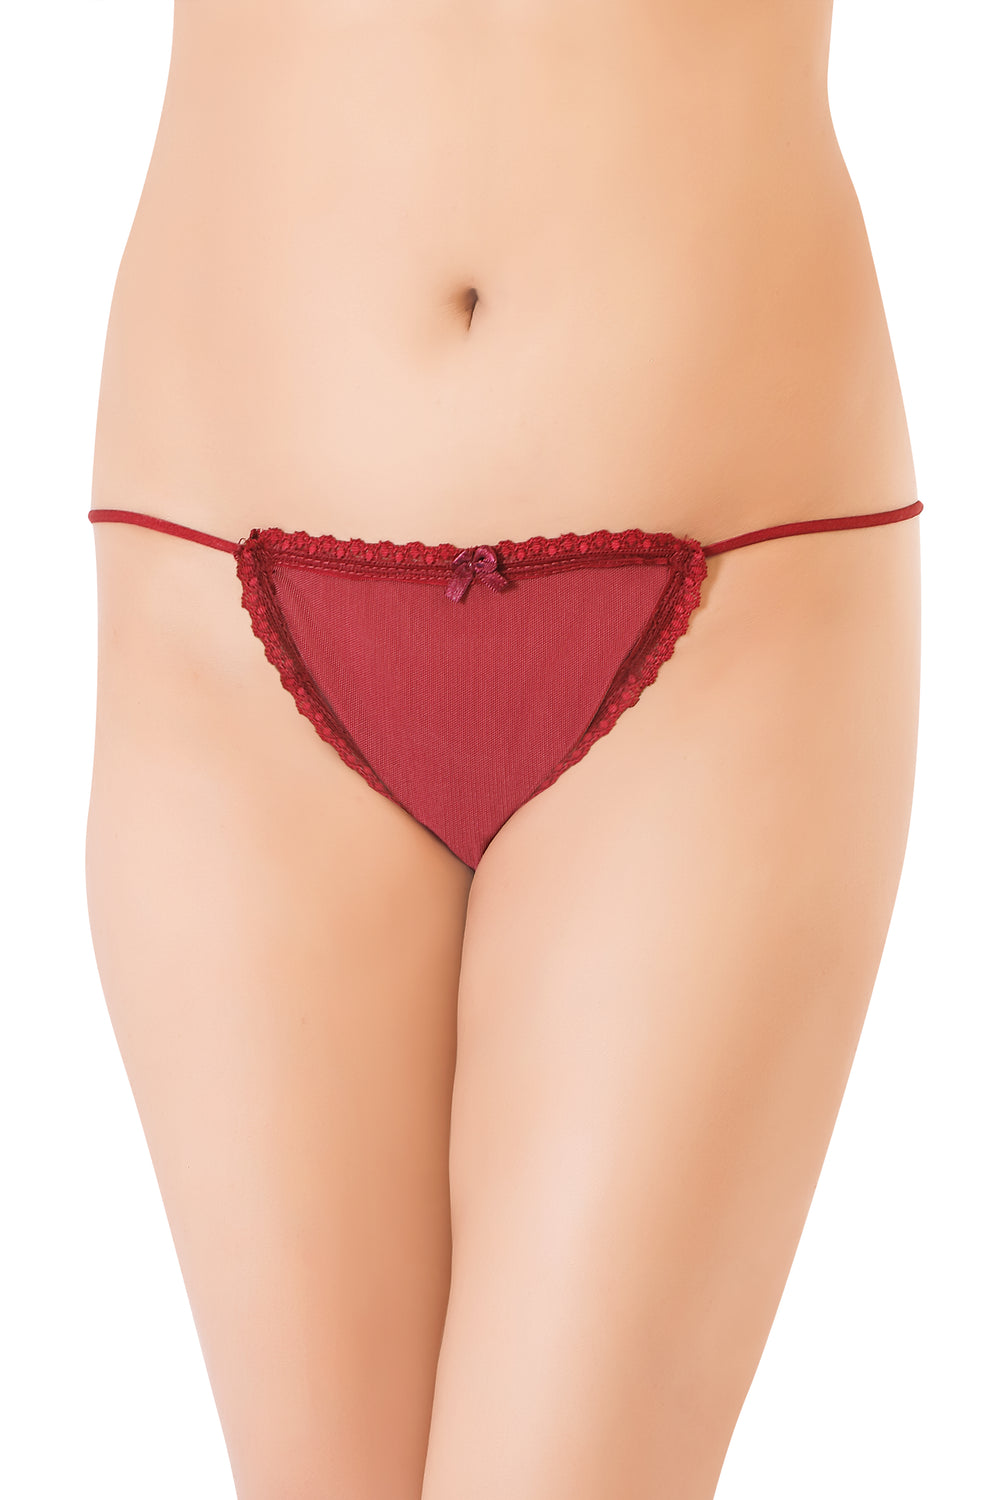 Generic Women's Nylon Sleek String Lusty Red Bikini Panty (lusty Red) at Rs  229.00, Gingee